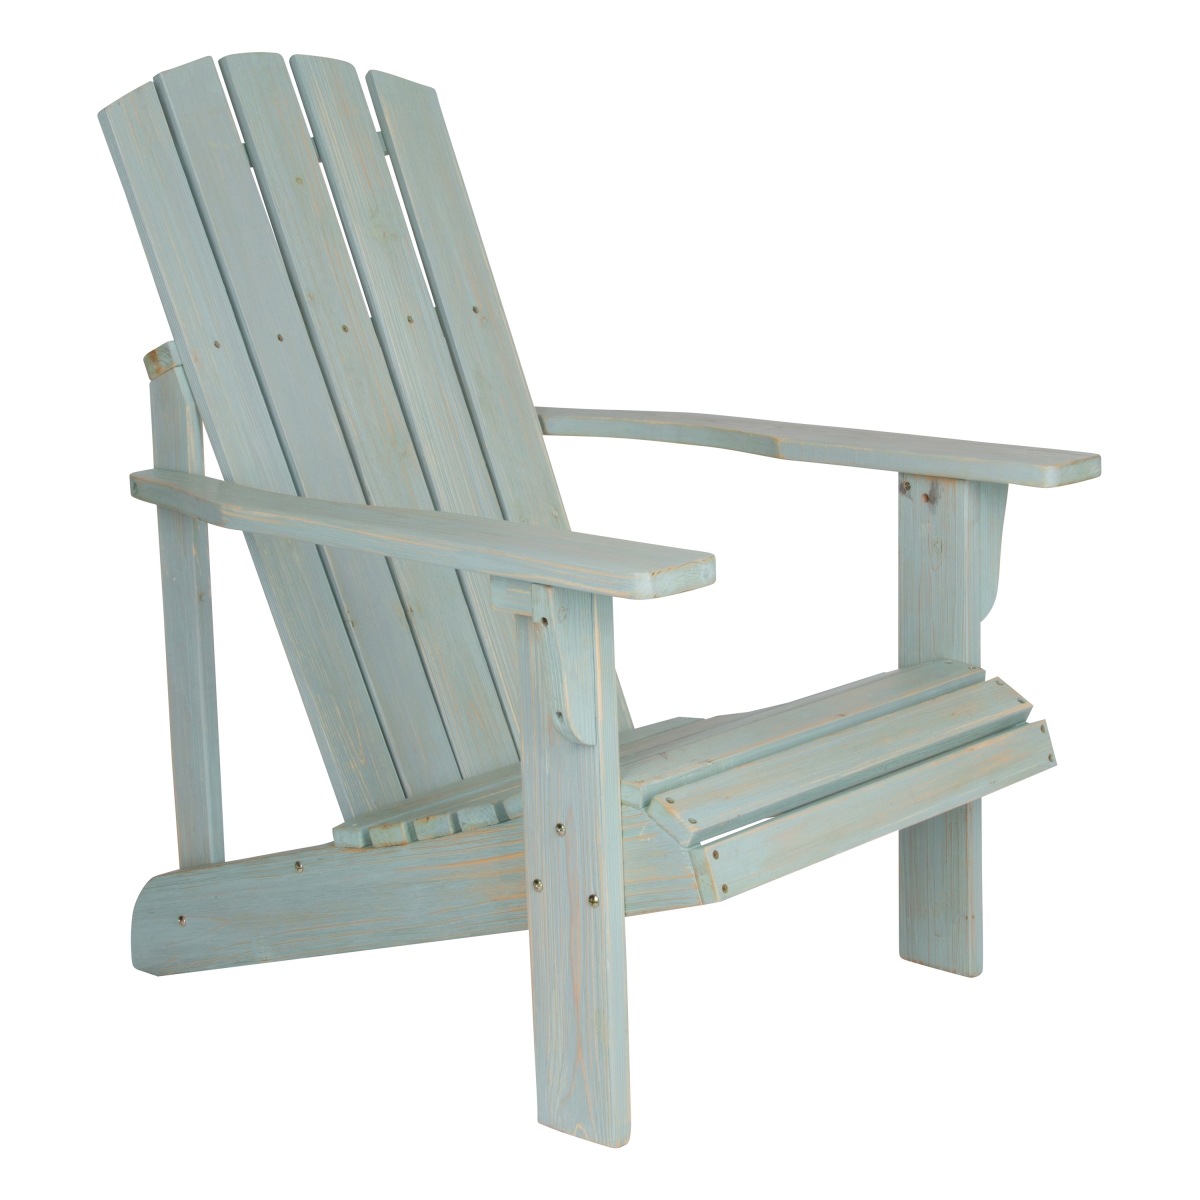 5616db Lakewood Rustic Adirondack Chair, Dutch Blue